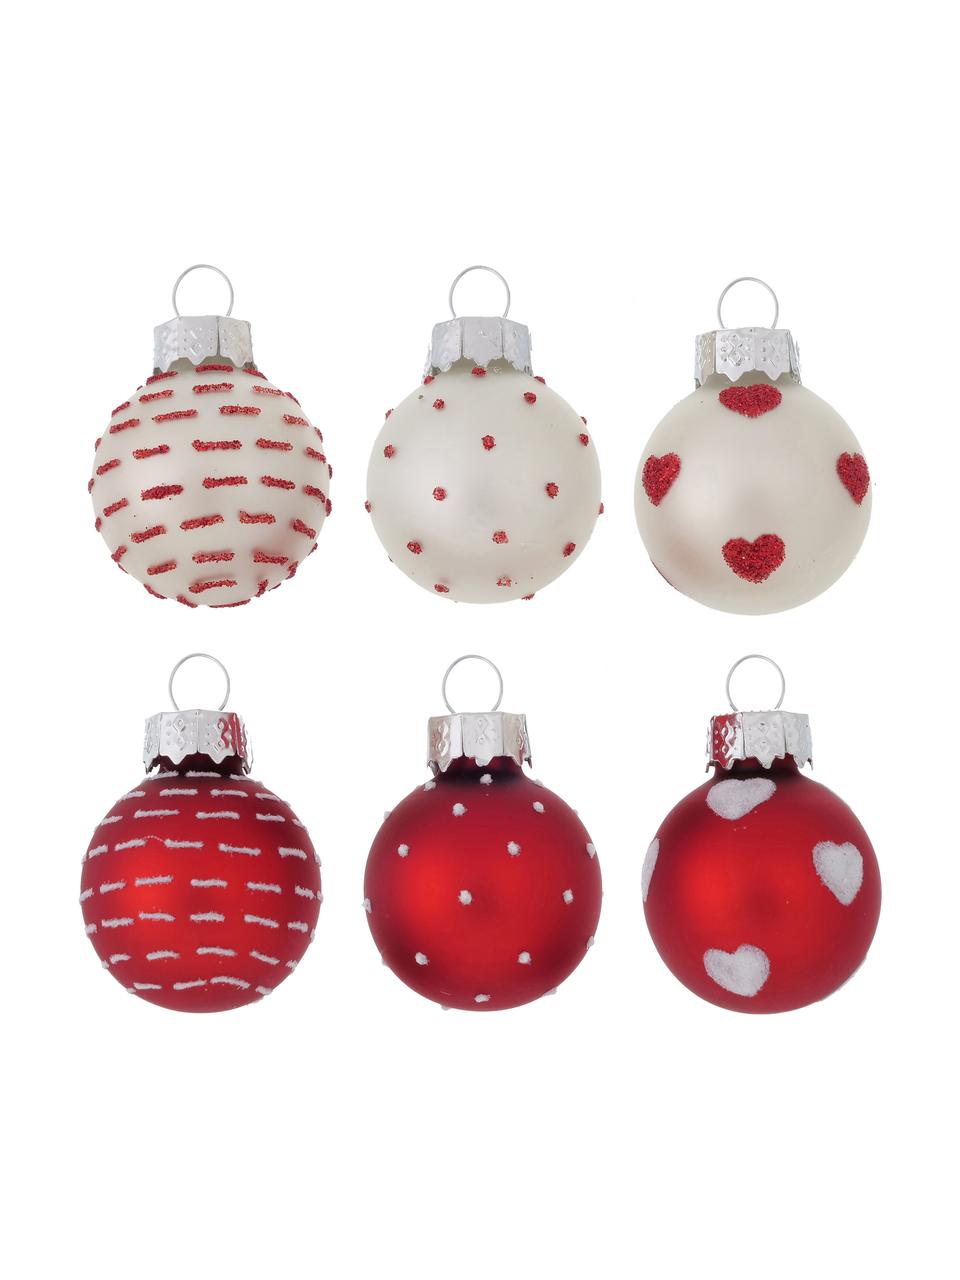 Kerstballenset Lumi, 12-delig, Wit, rood, Ø 3 x H 4 cm